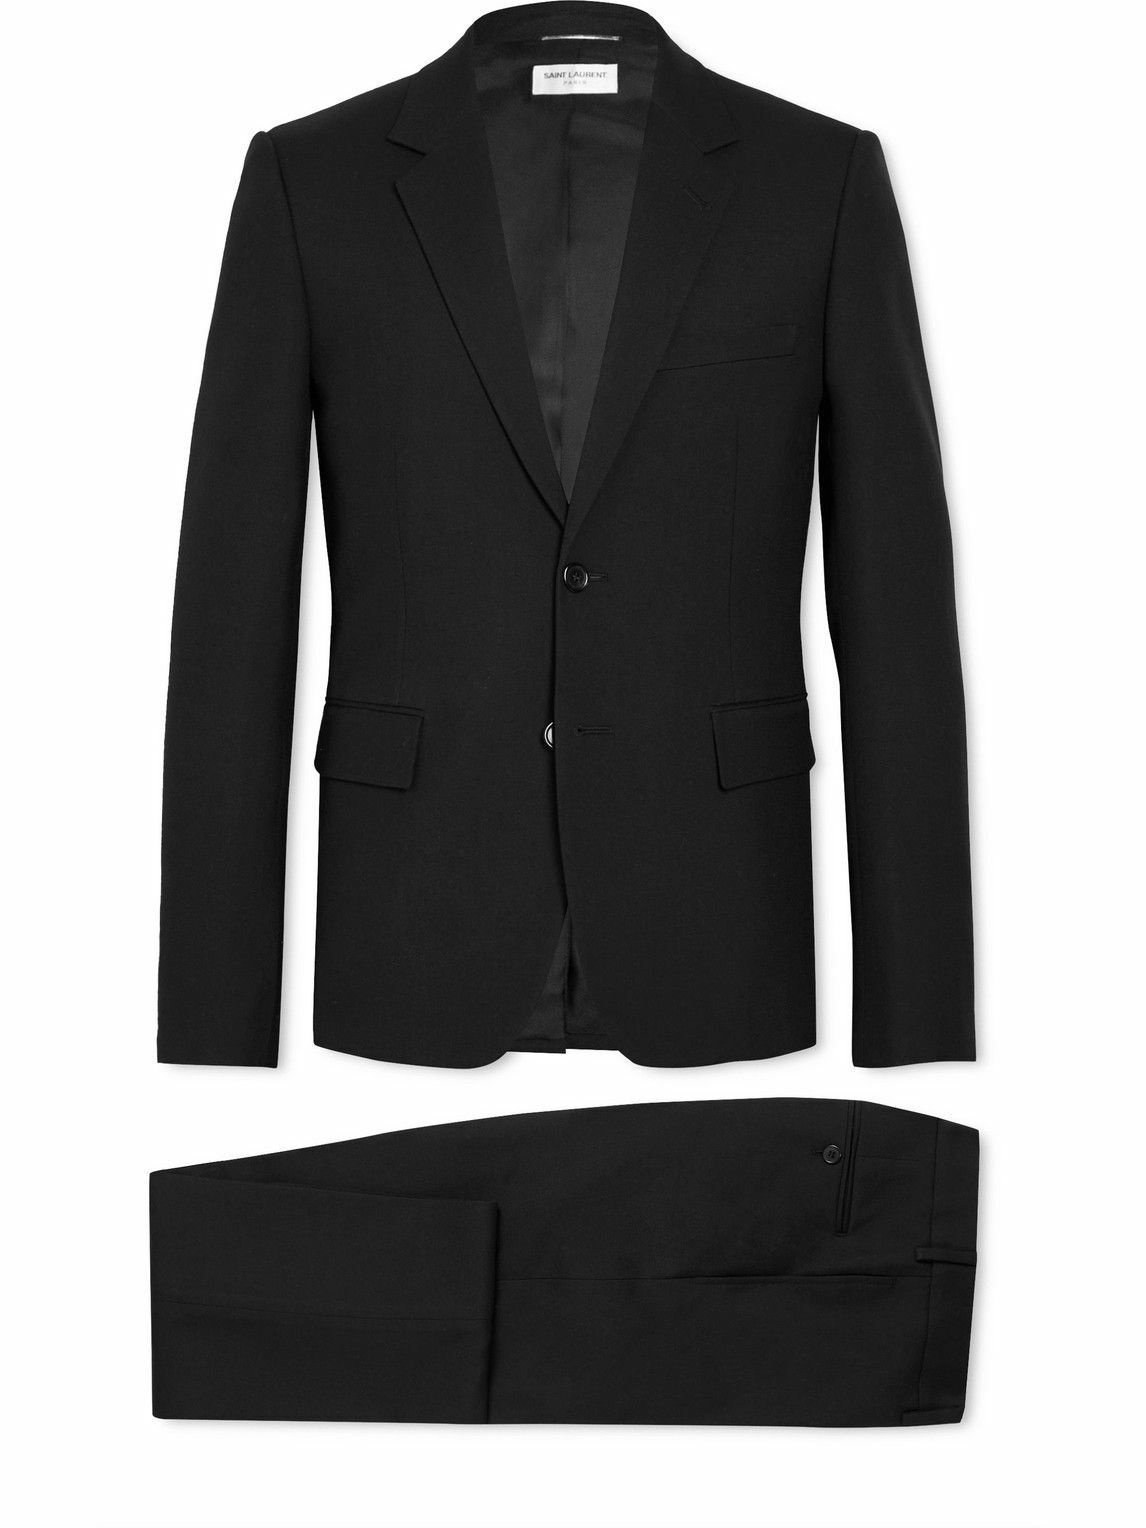 Ecru Separate Suit for Men - Fursac C3BAMO-BX02-02